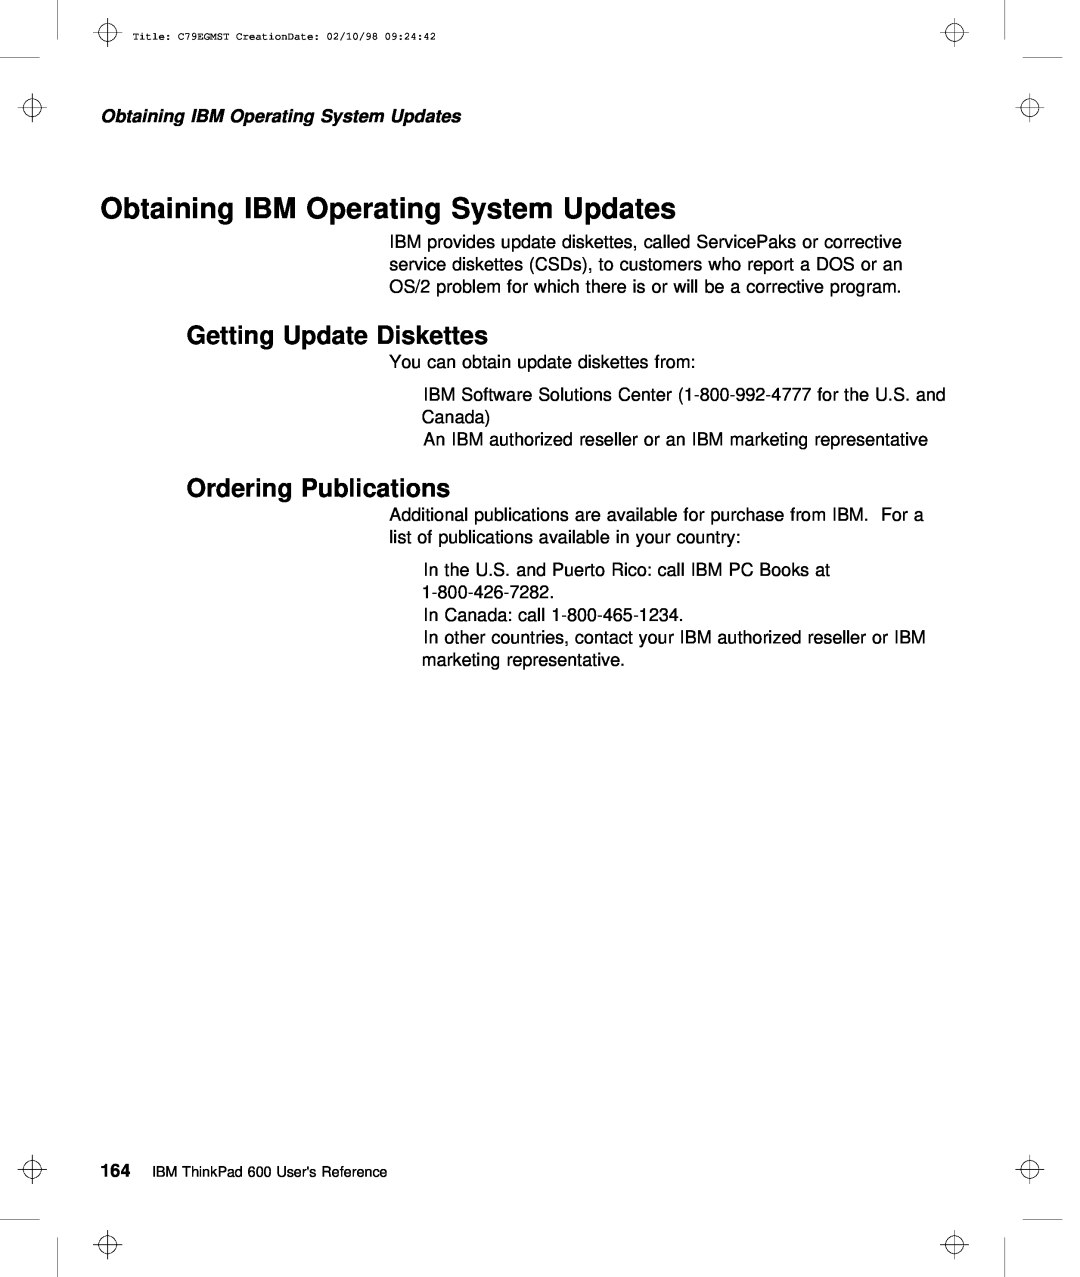 IBM C79EGMST manual Obtaining IBM Operating System Updates, Getting Update Diskettes, Ordering Publications 